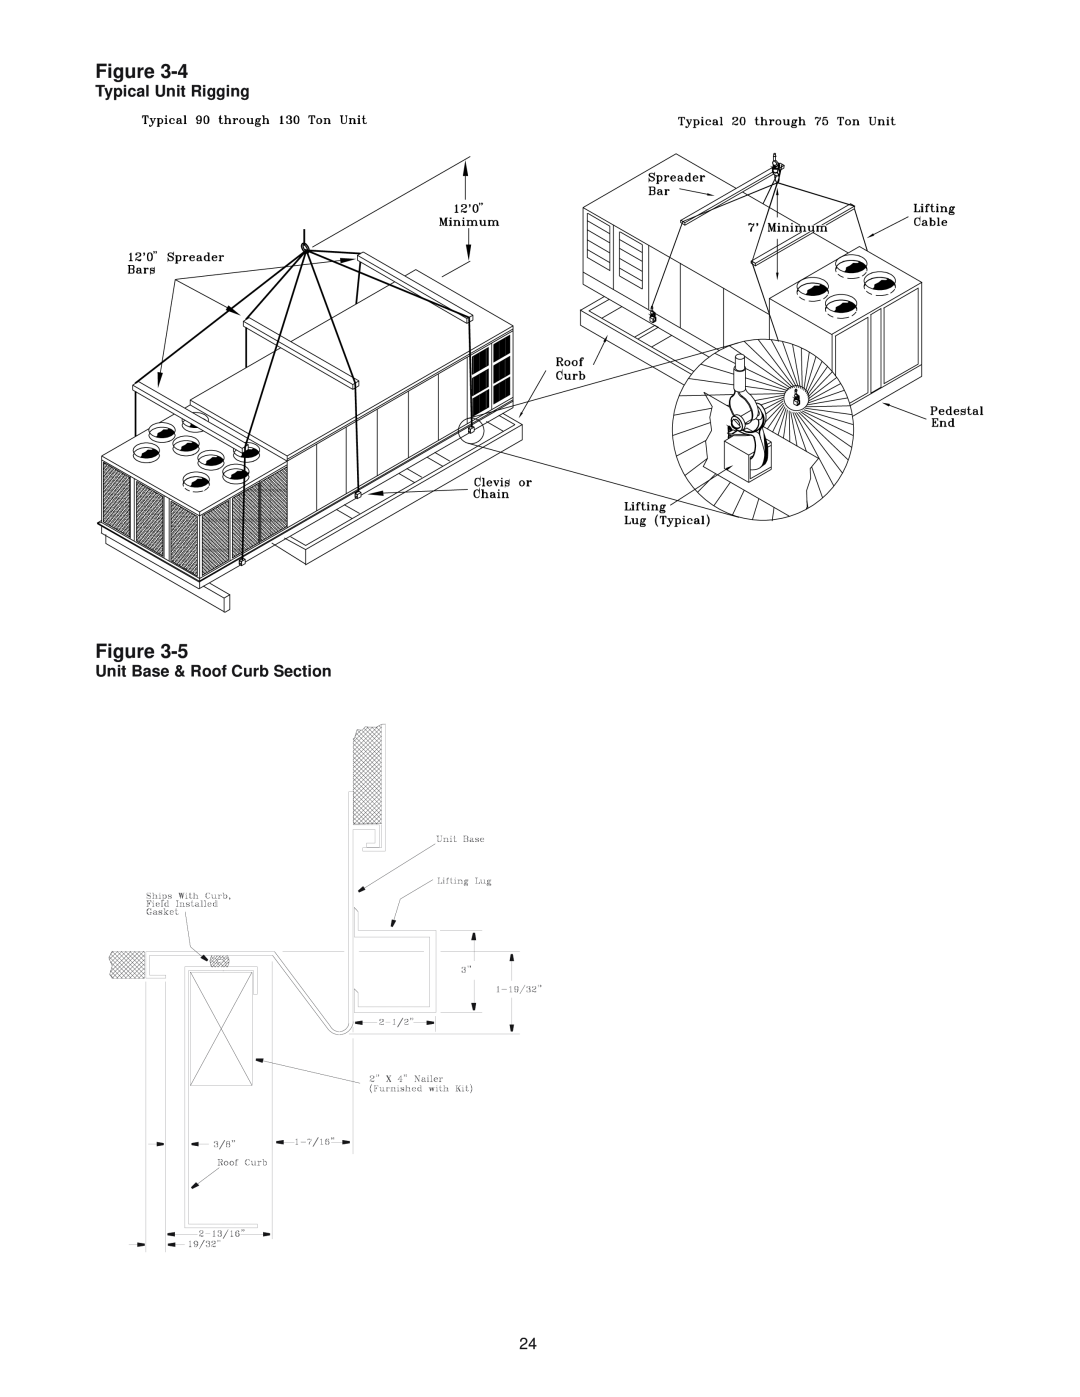 Trane RT-SVX10C-EN specifications Figure, Typical Unit Rigging, Unit Base & Roof Curb Section 